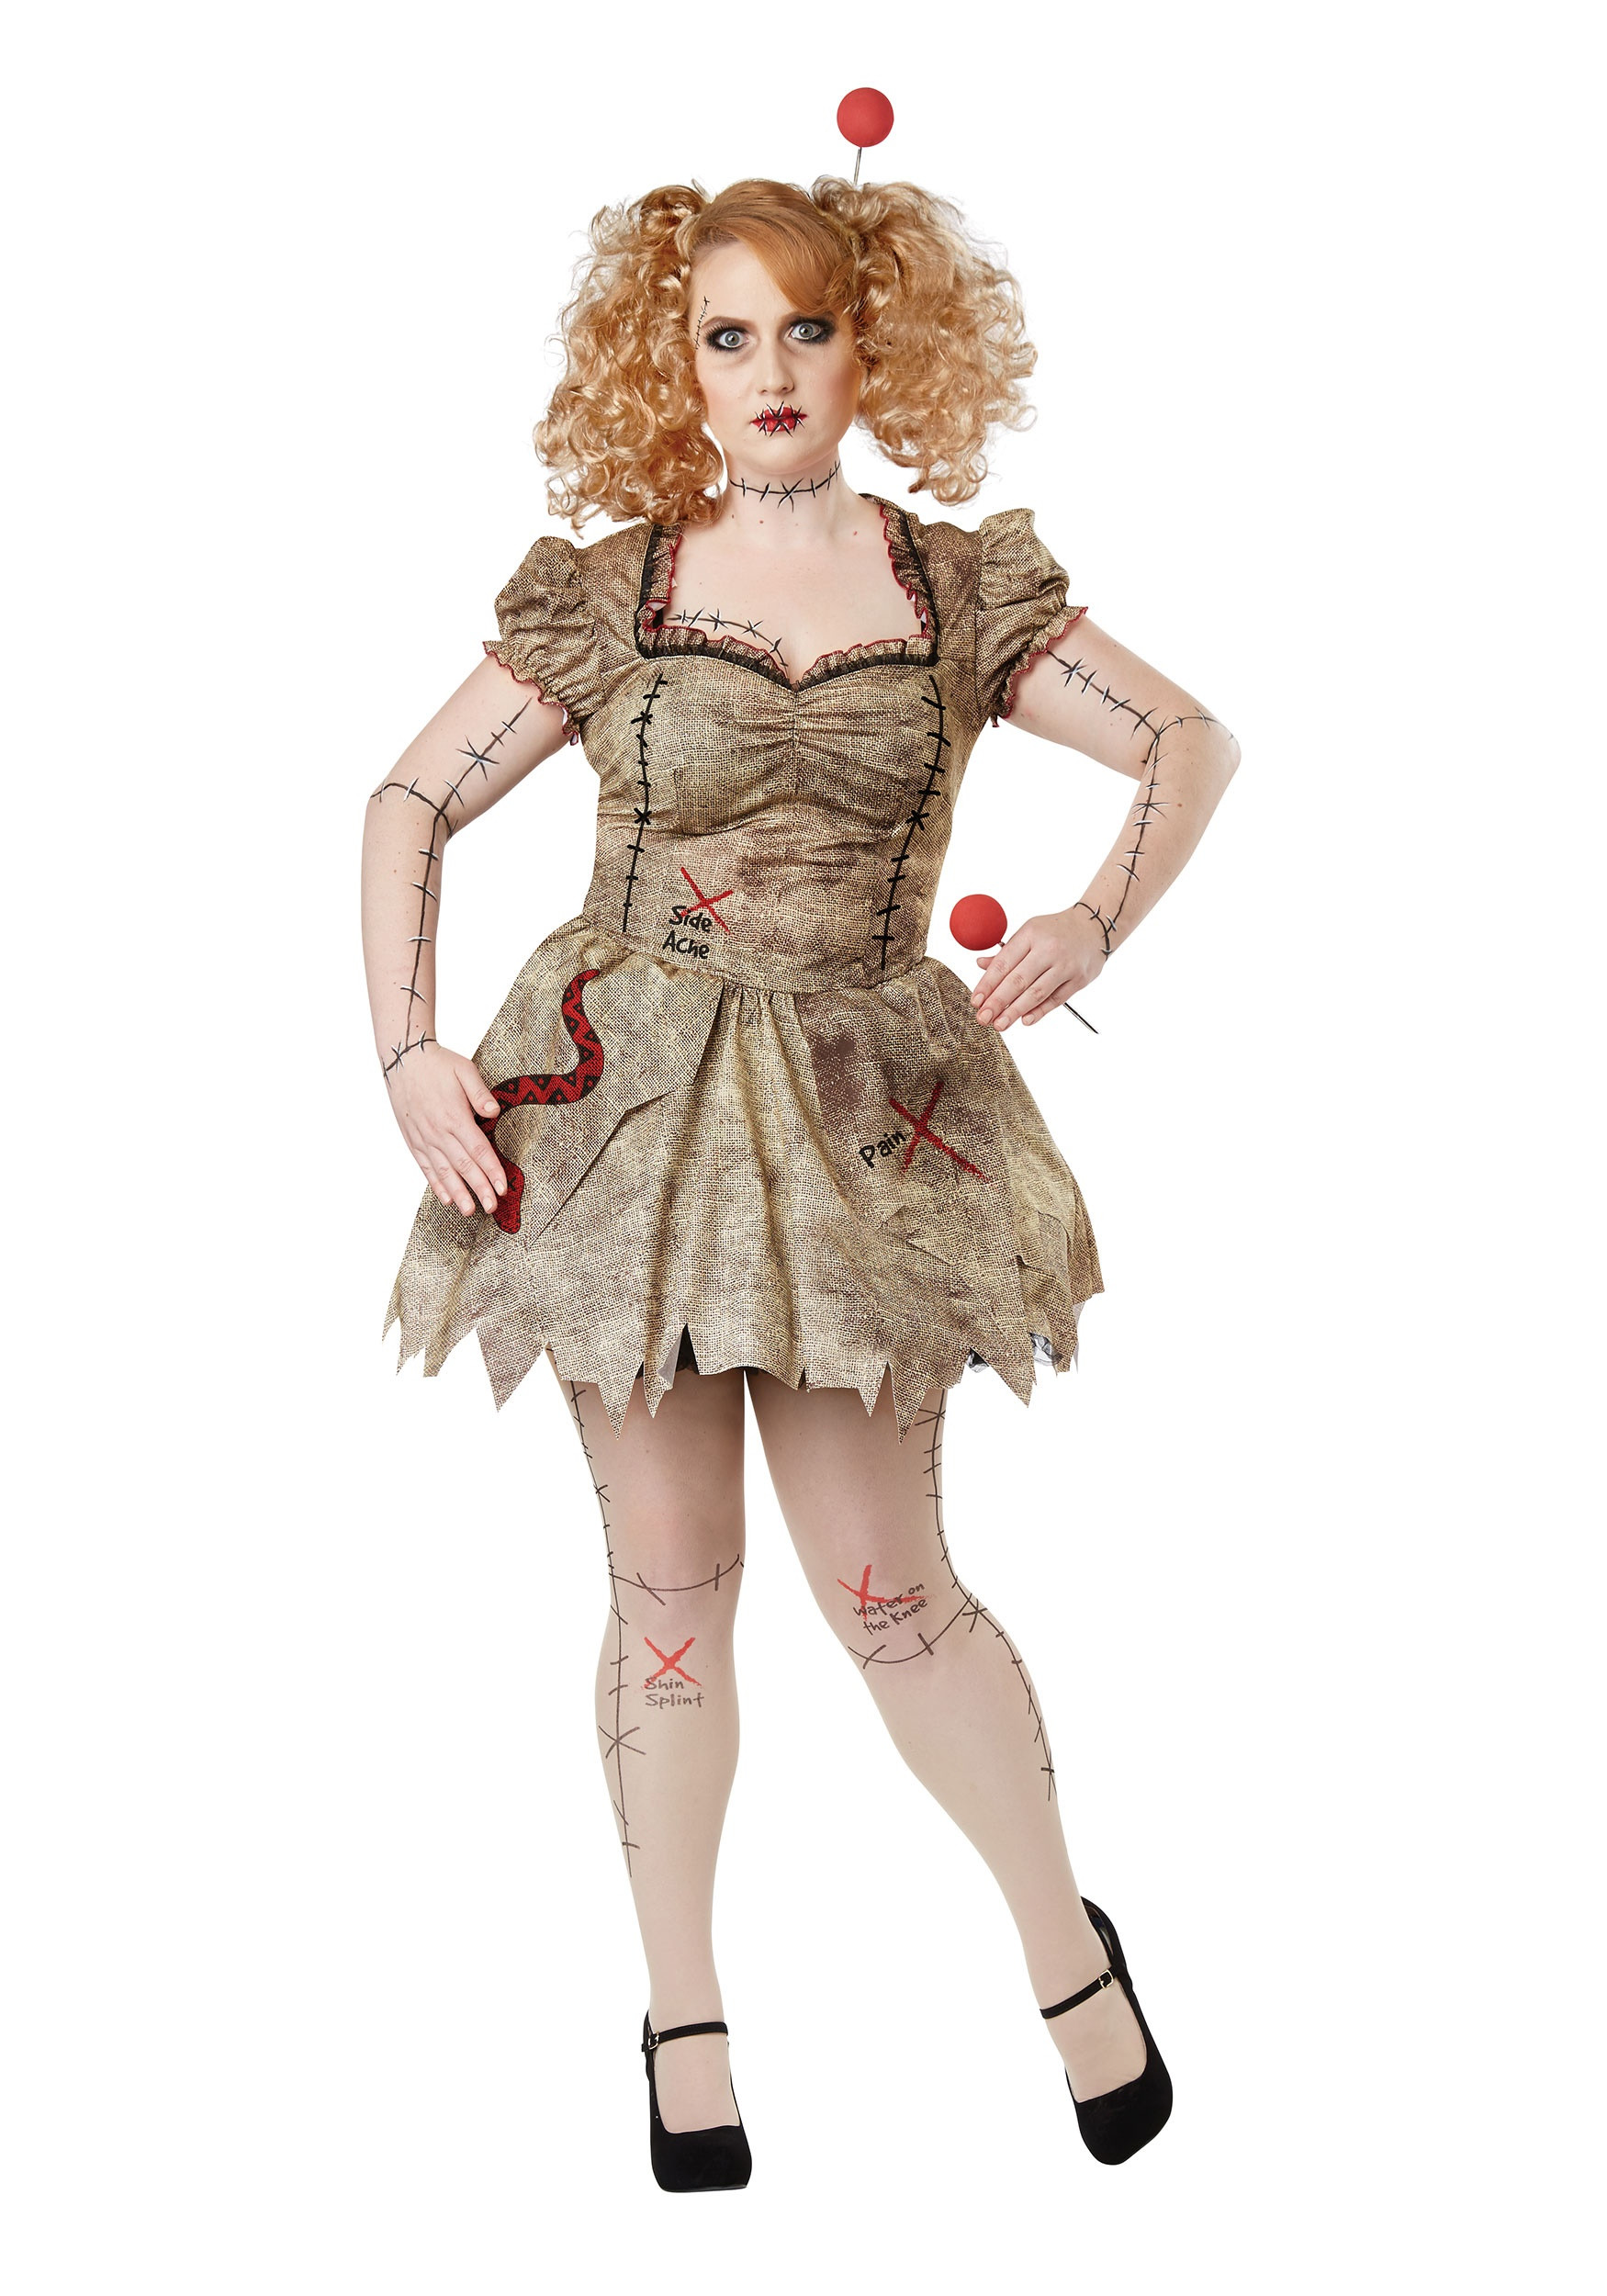 Plus Size Halloween Costume Ideas
 Voodoo Dolly Women s Plus Size Costume